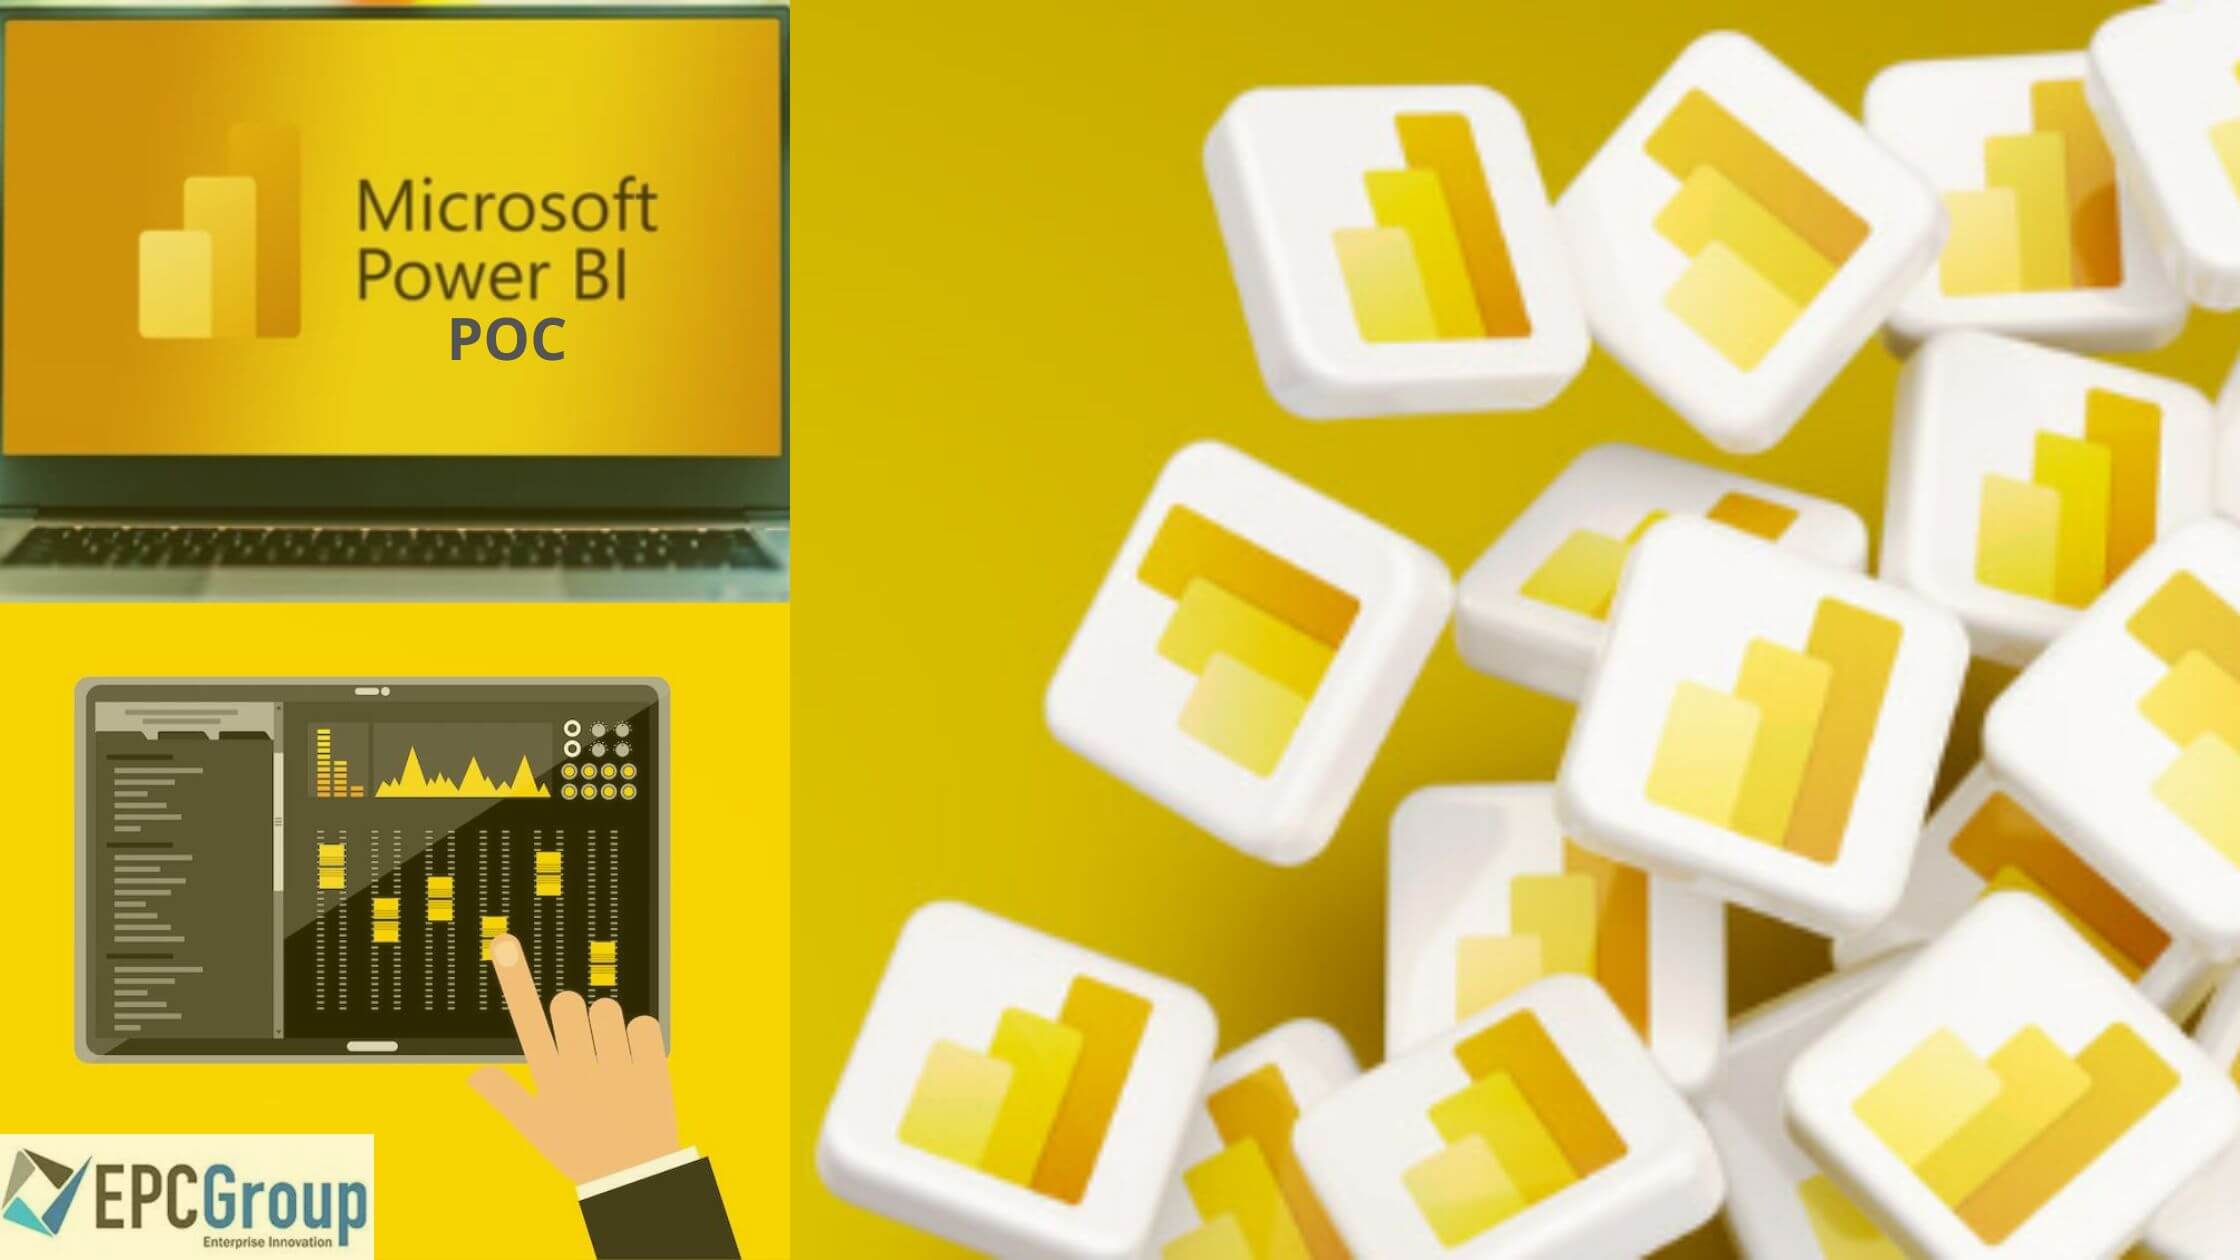 Is Microsoft Power BI POC Your New Online Dashboard App?